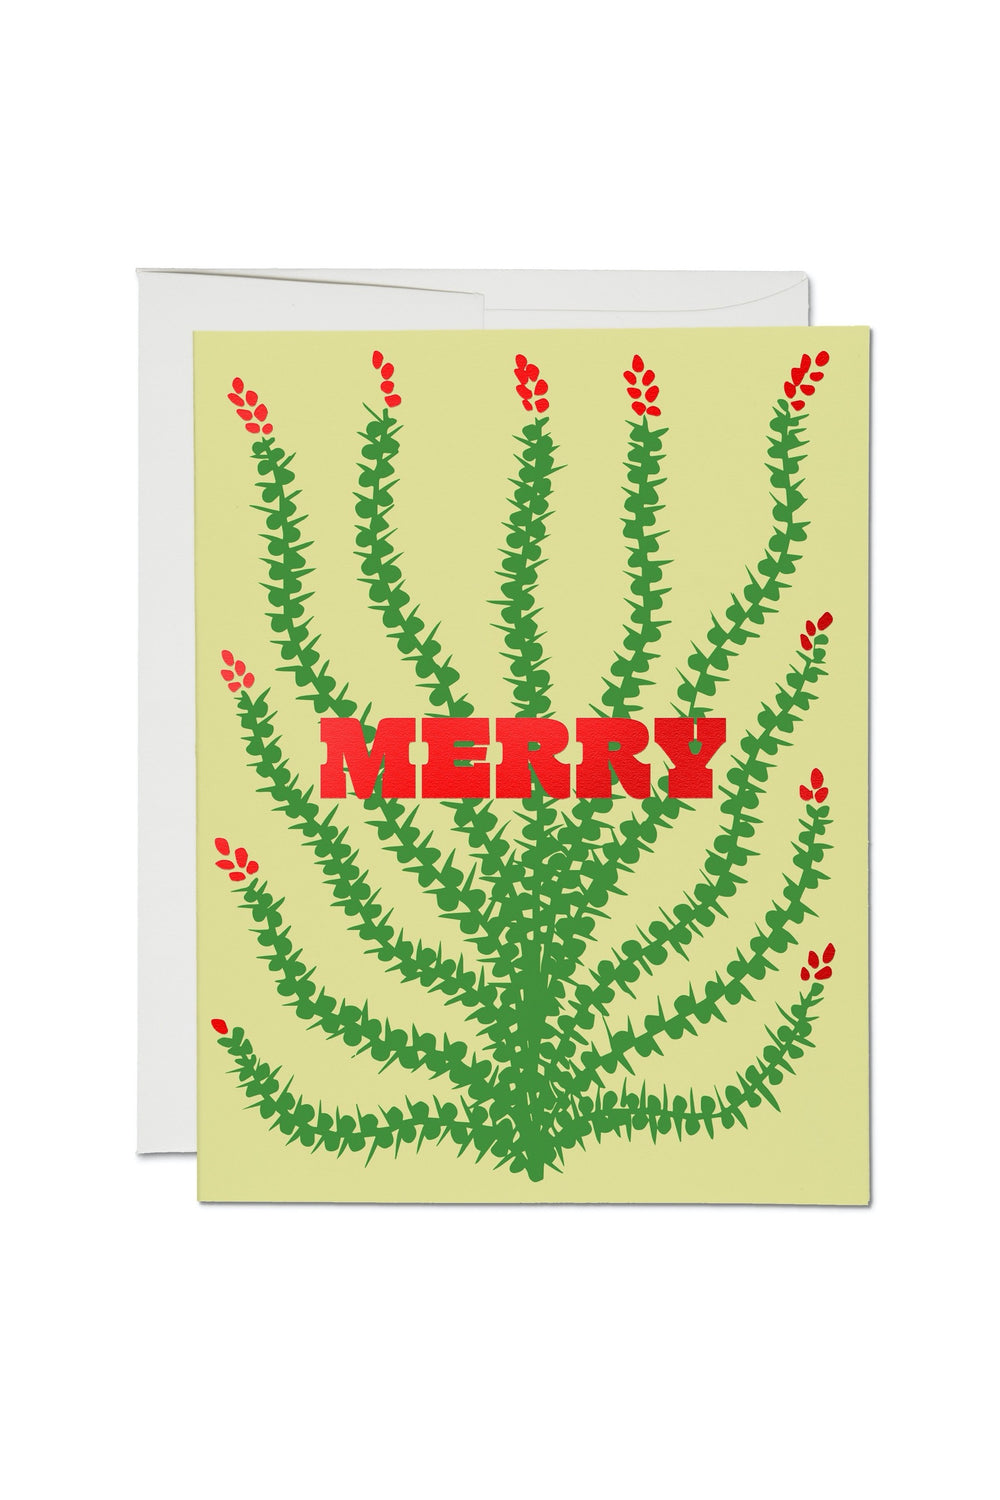 Holiday Cactus Card